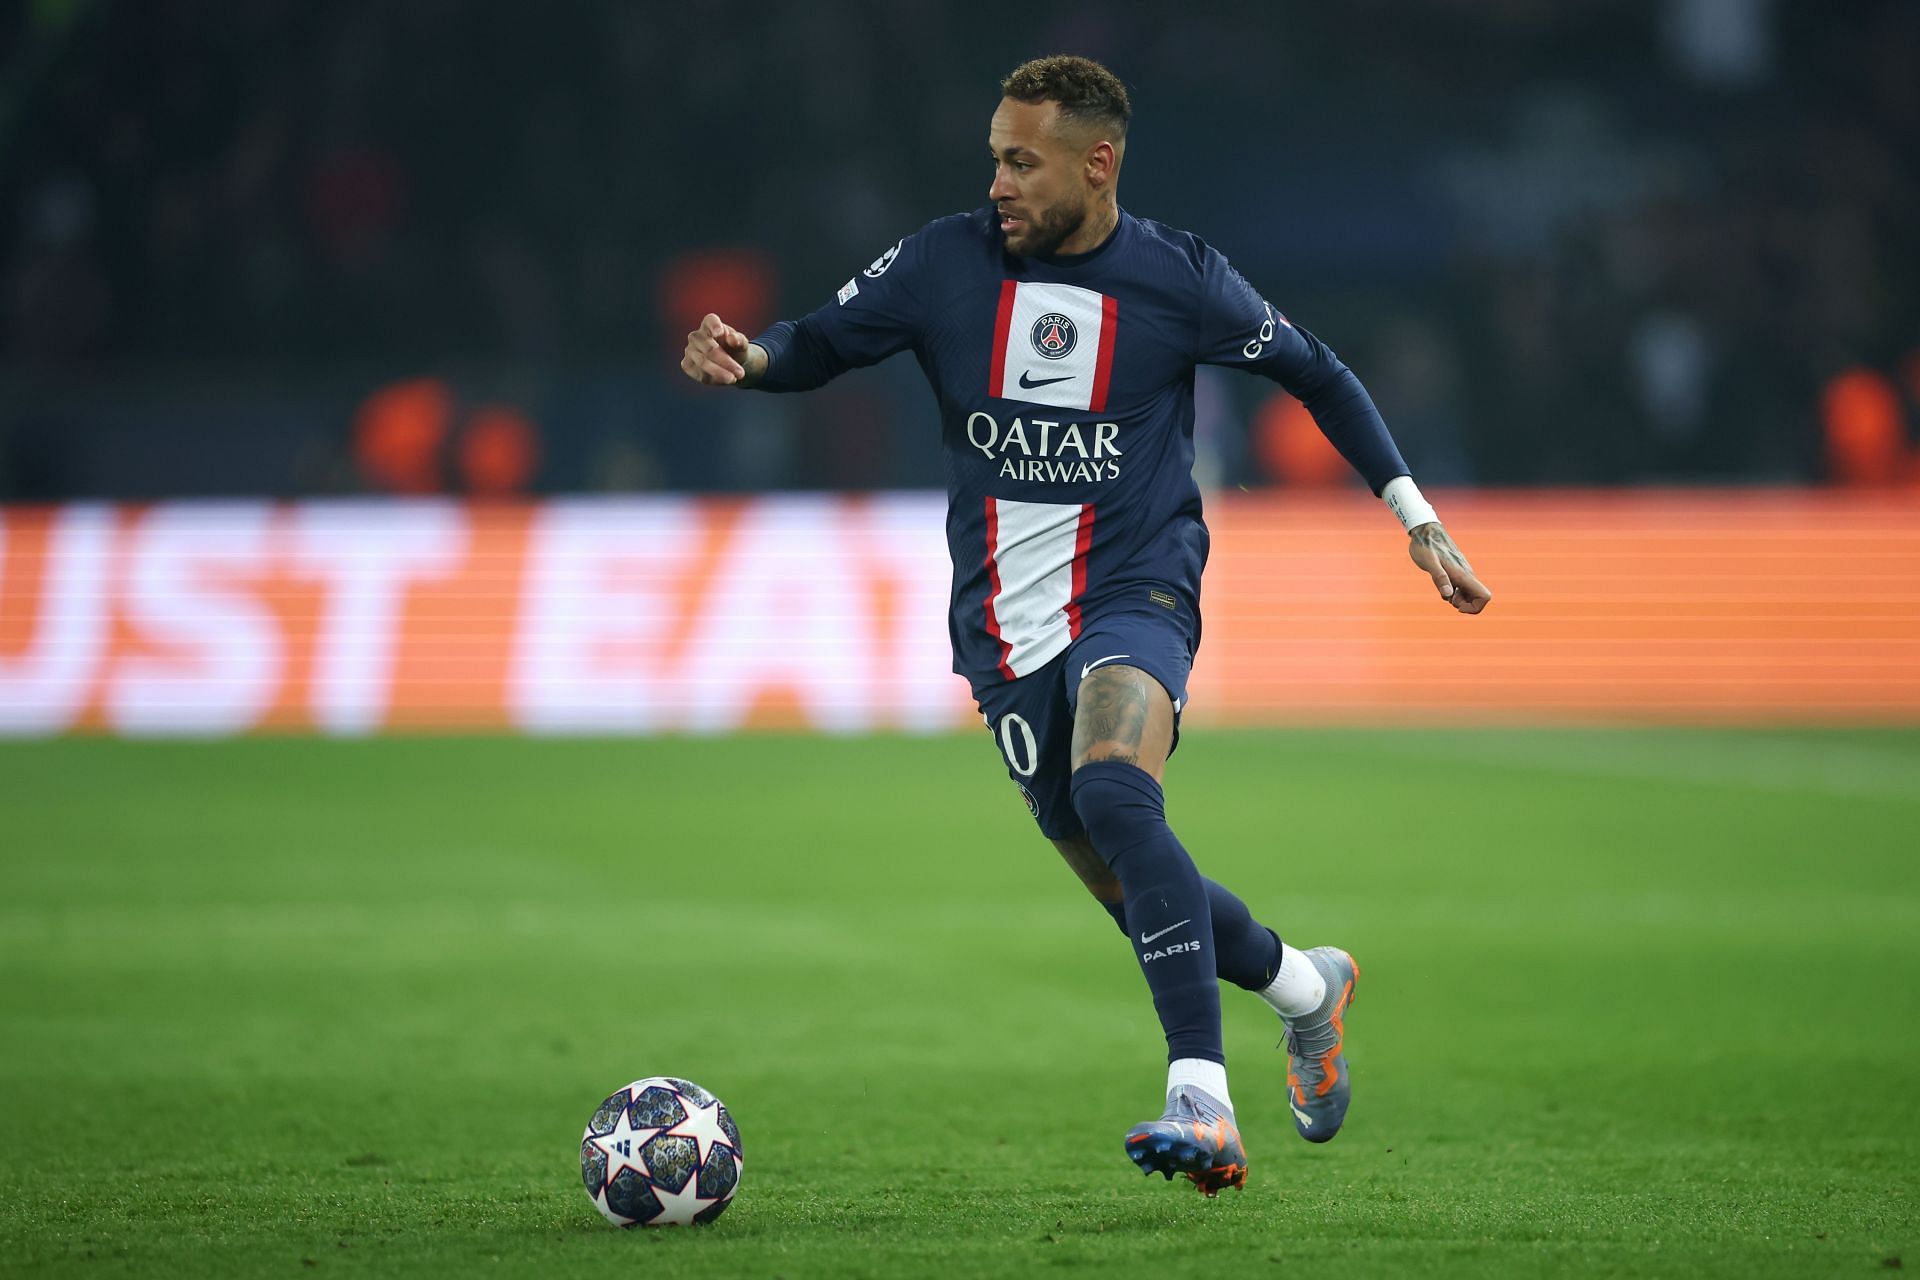 Neymar looks set to leave Paris this summer.